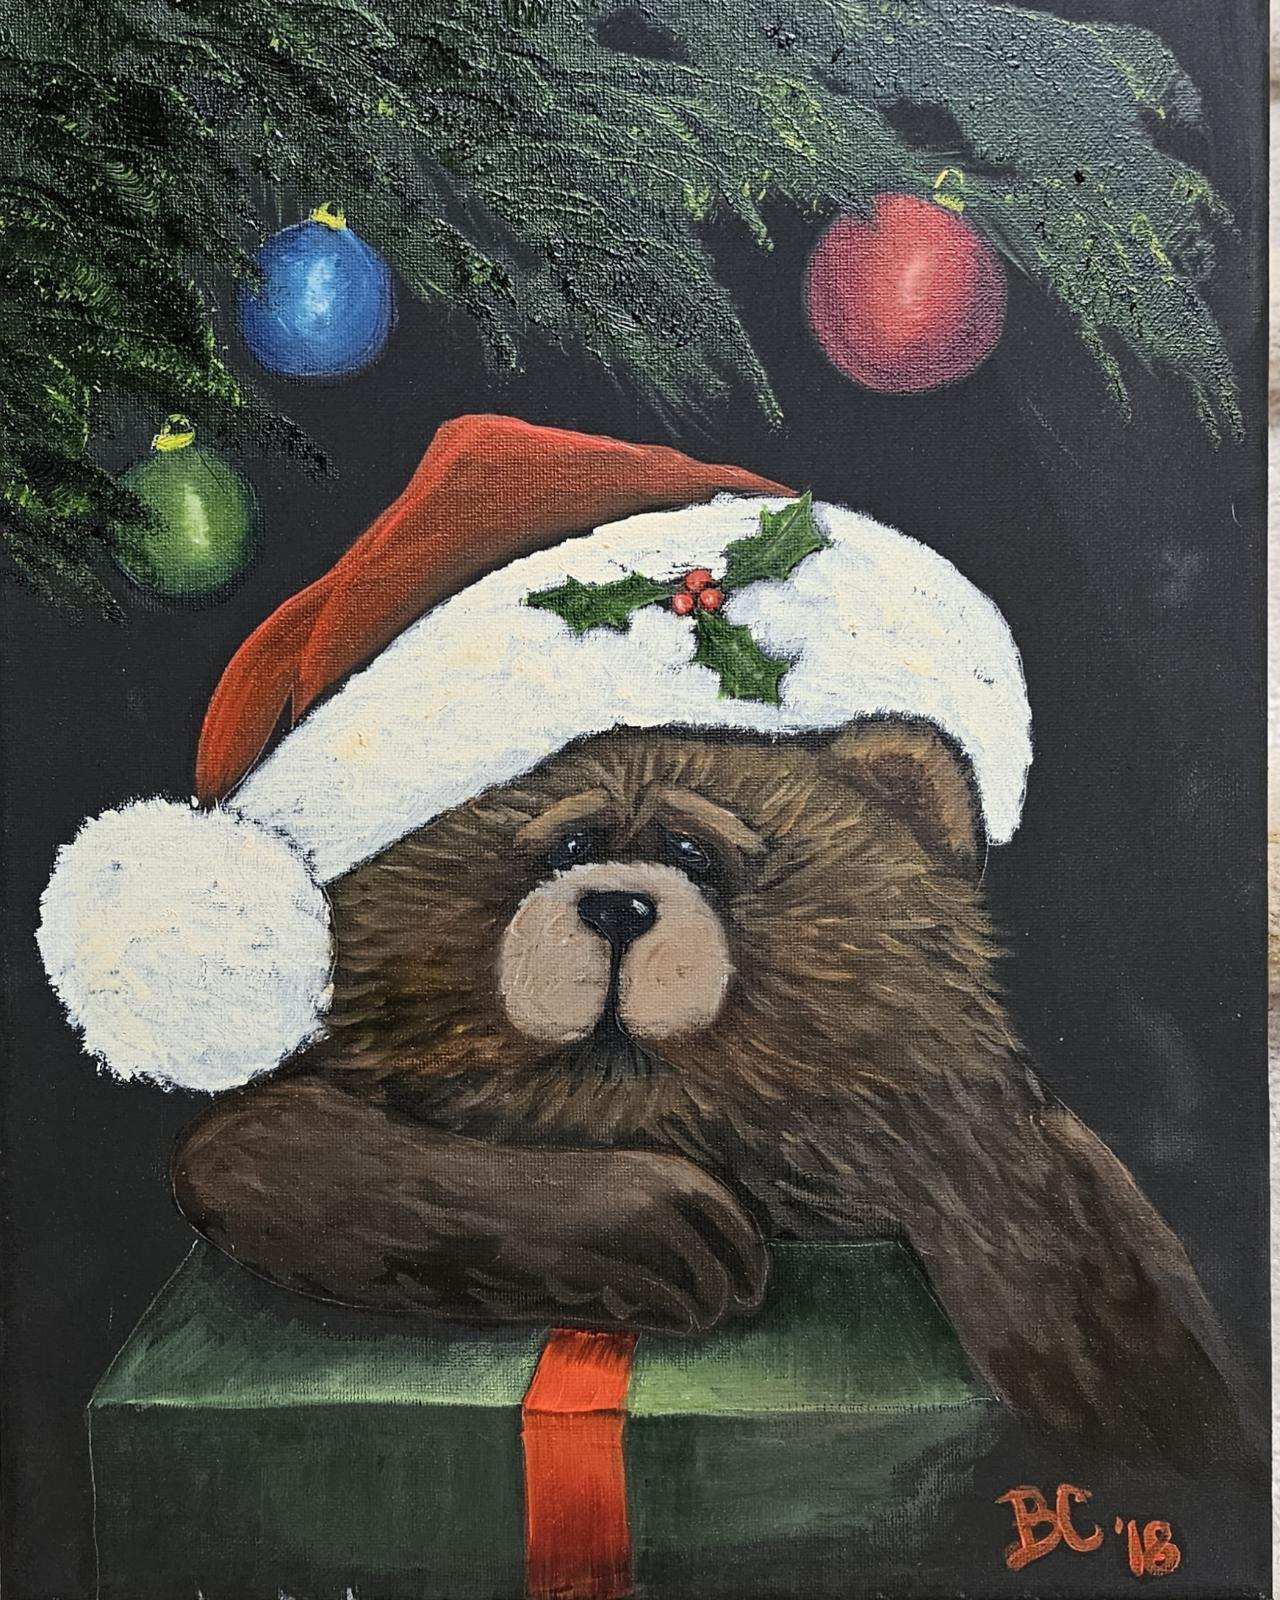 A Very Bear-y Christmas